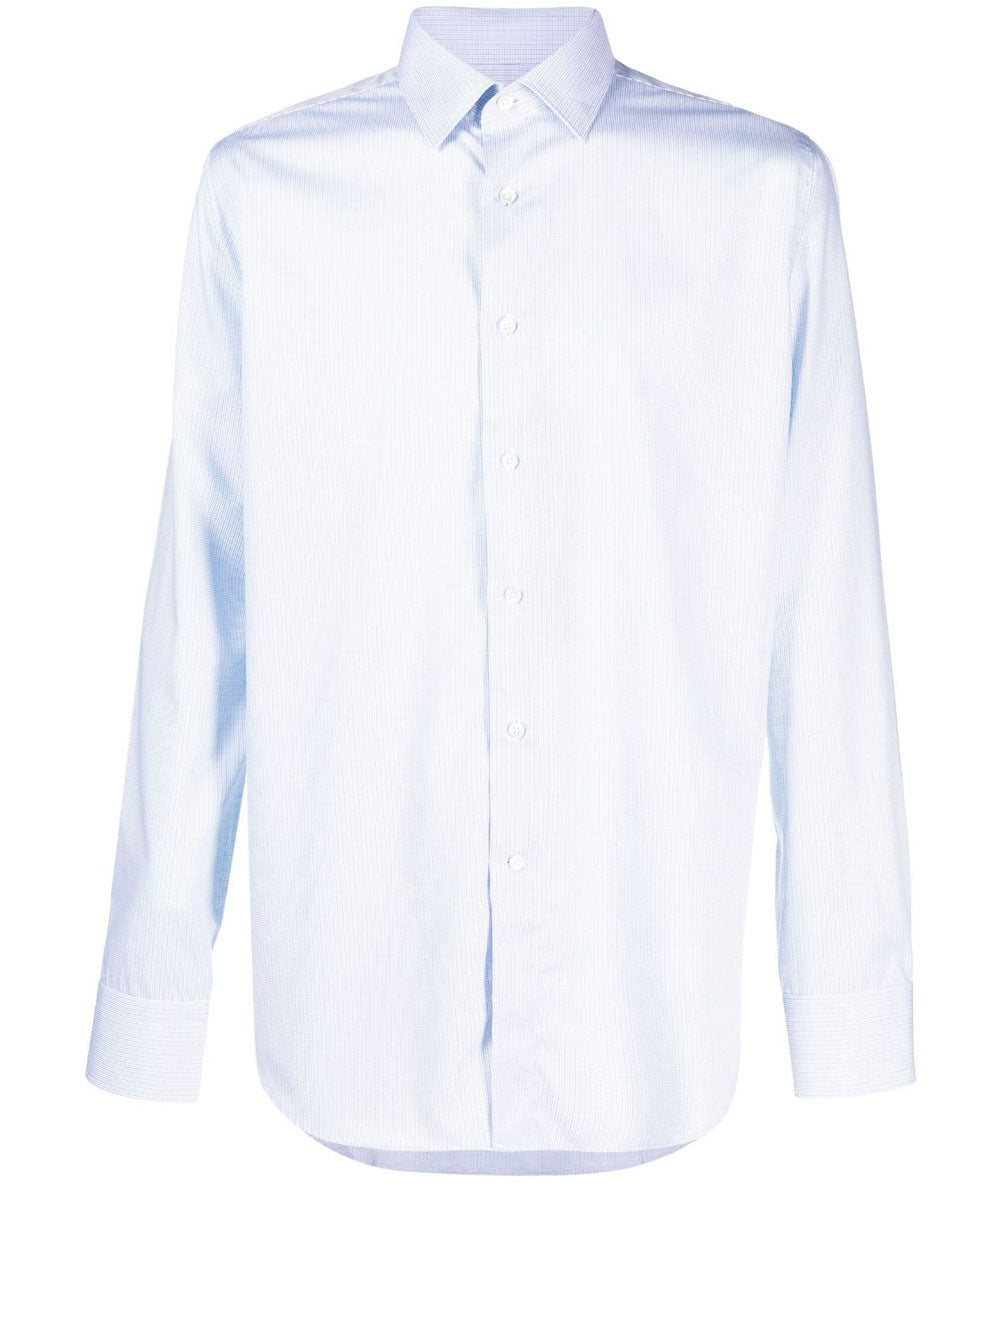 Micro-check cotton shirt